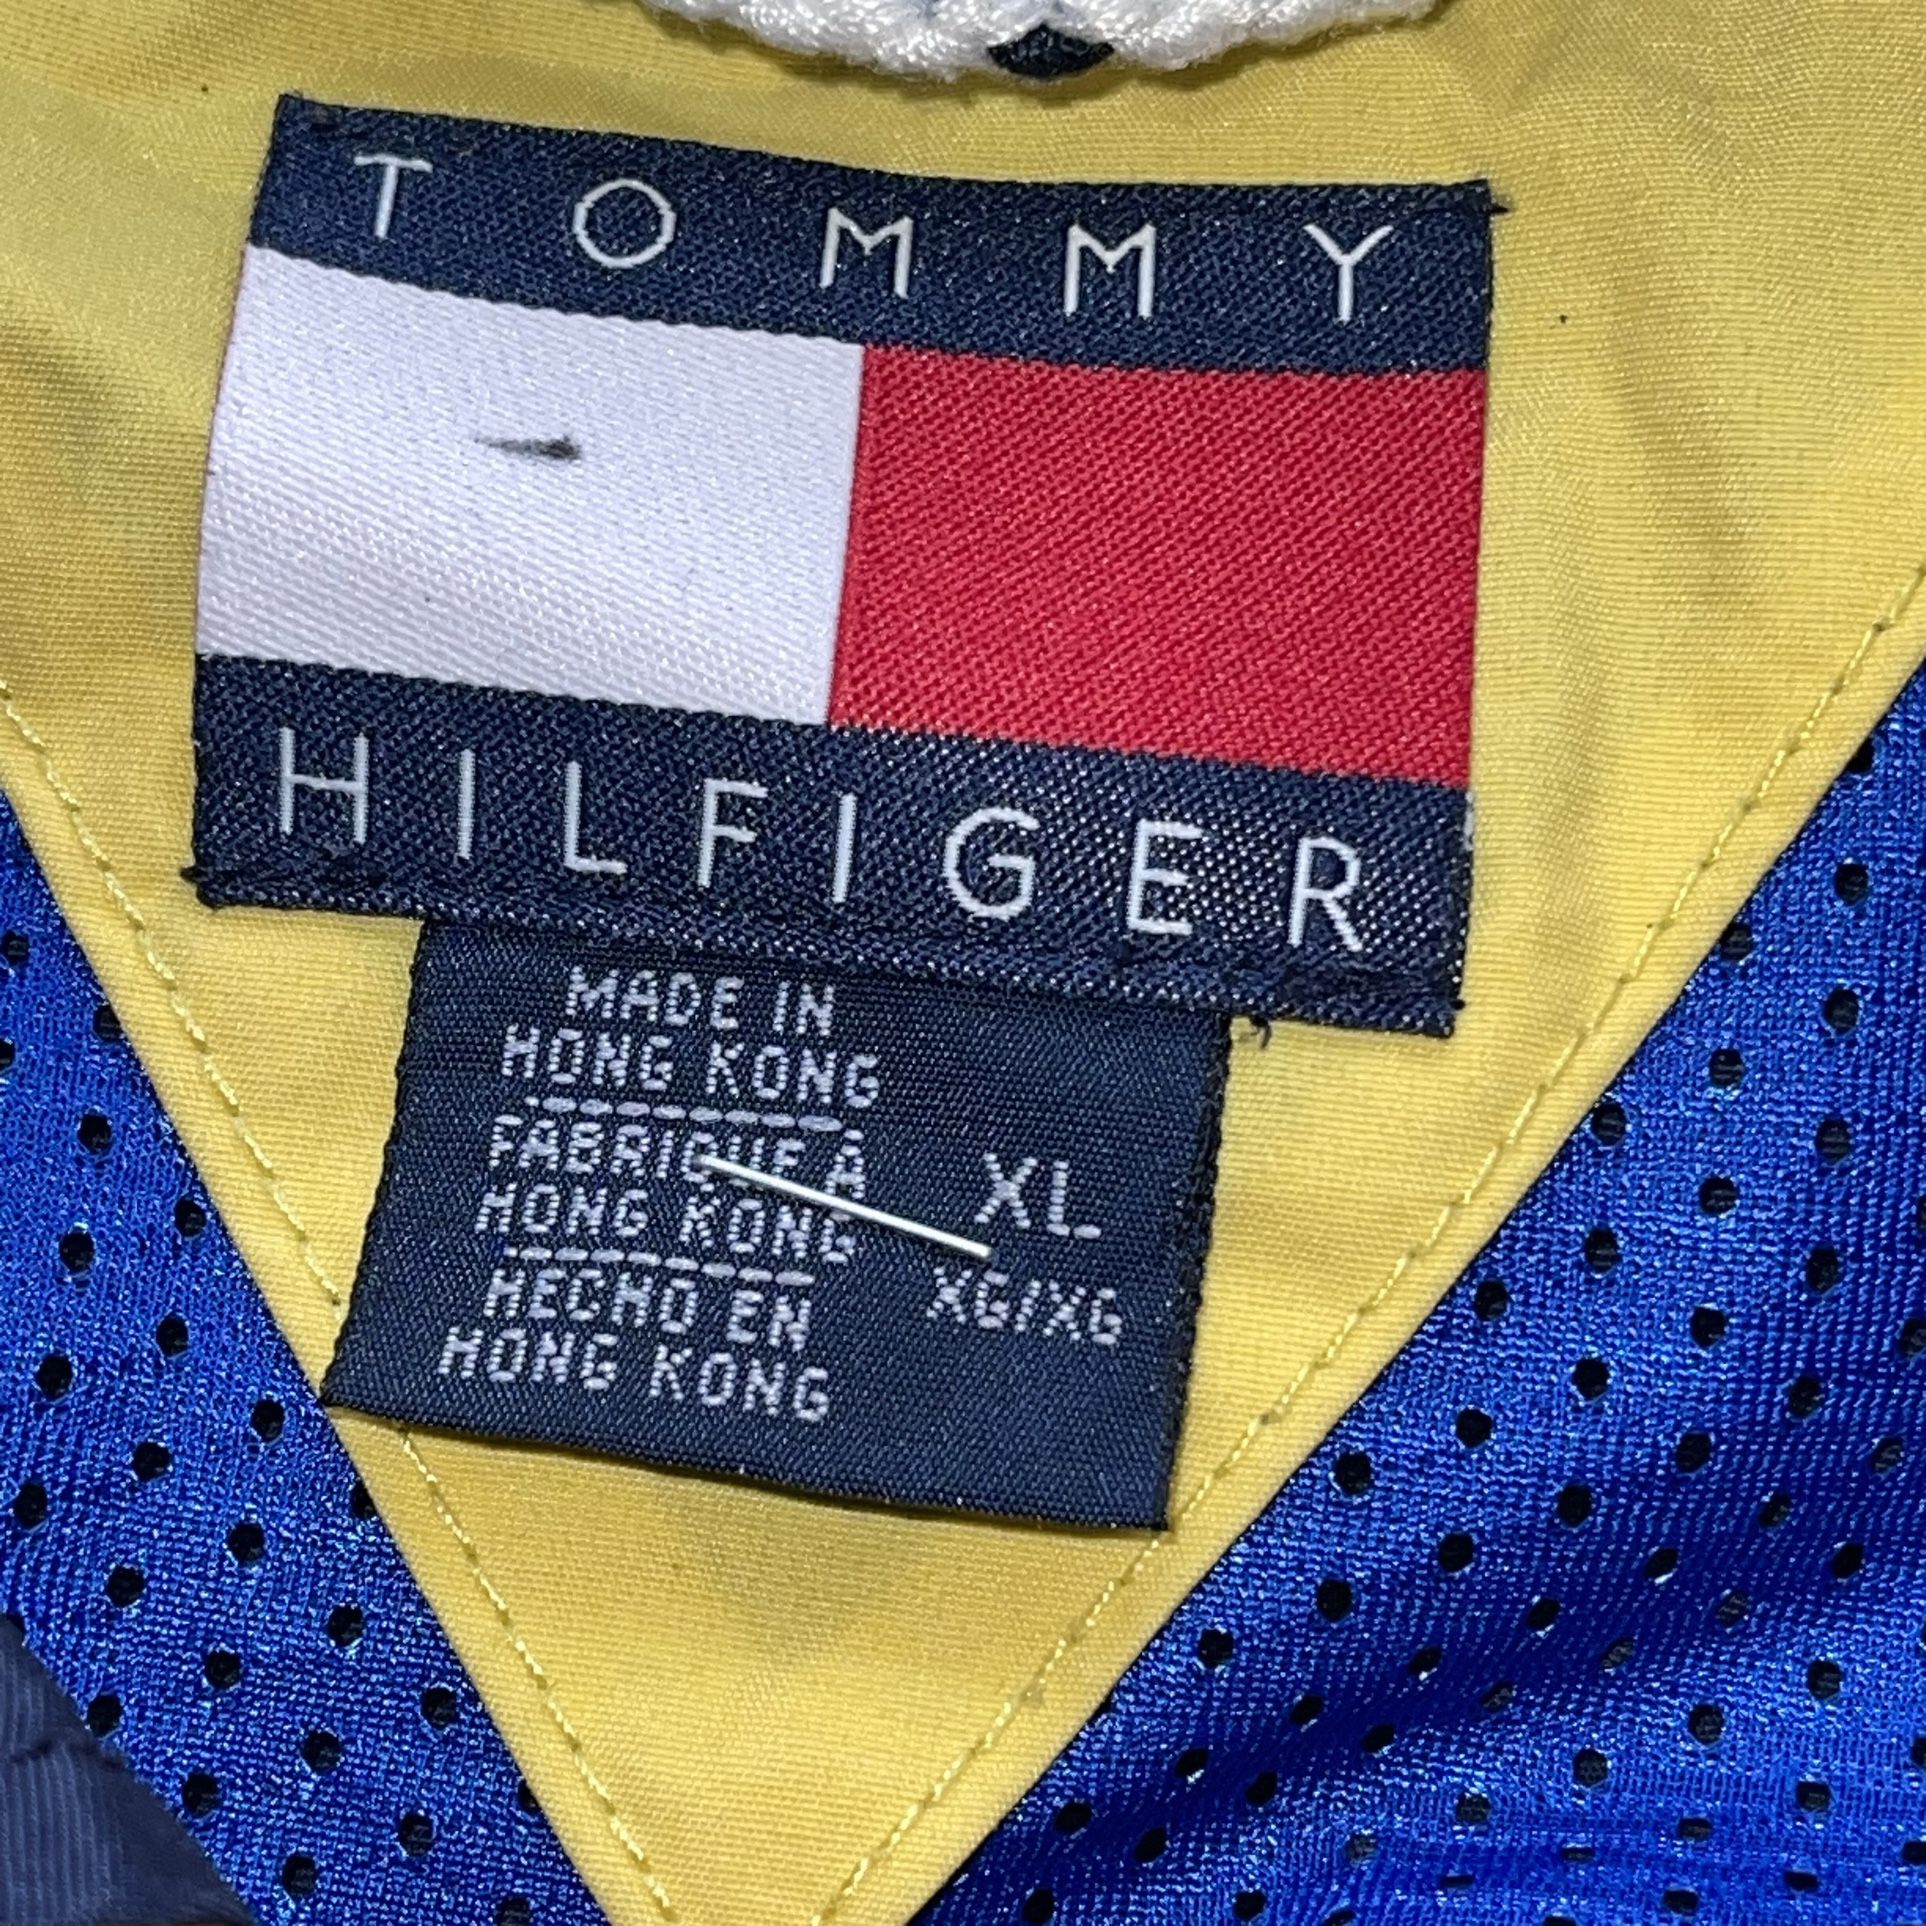 Tommy Hilfiger Jacket 